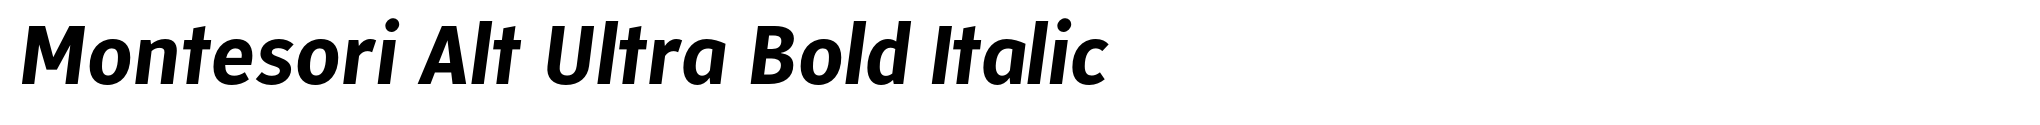 Montesori Alt Ultra Bold Italic image